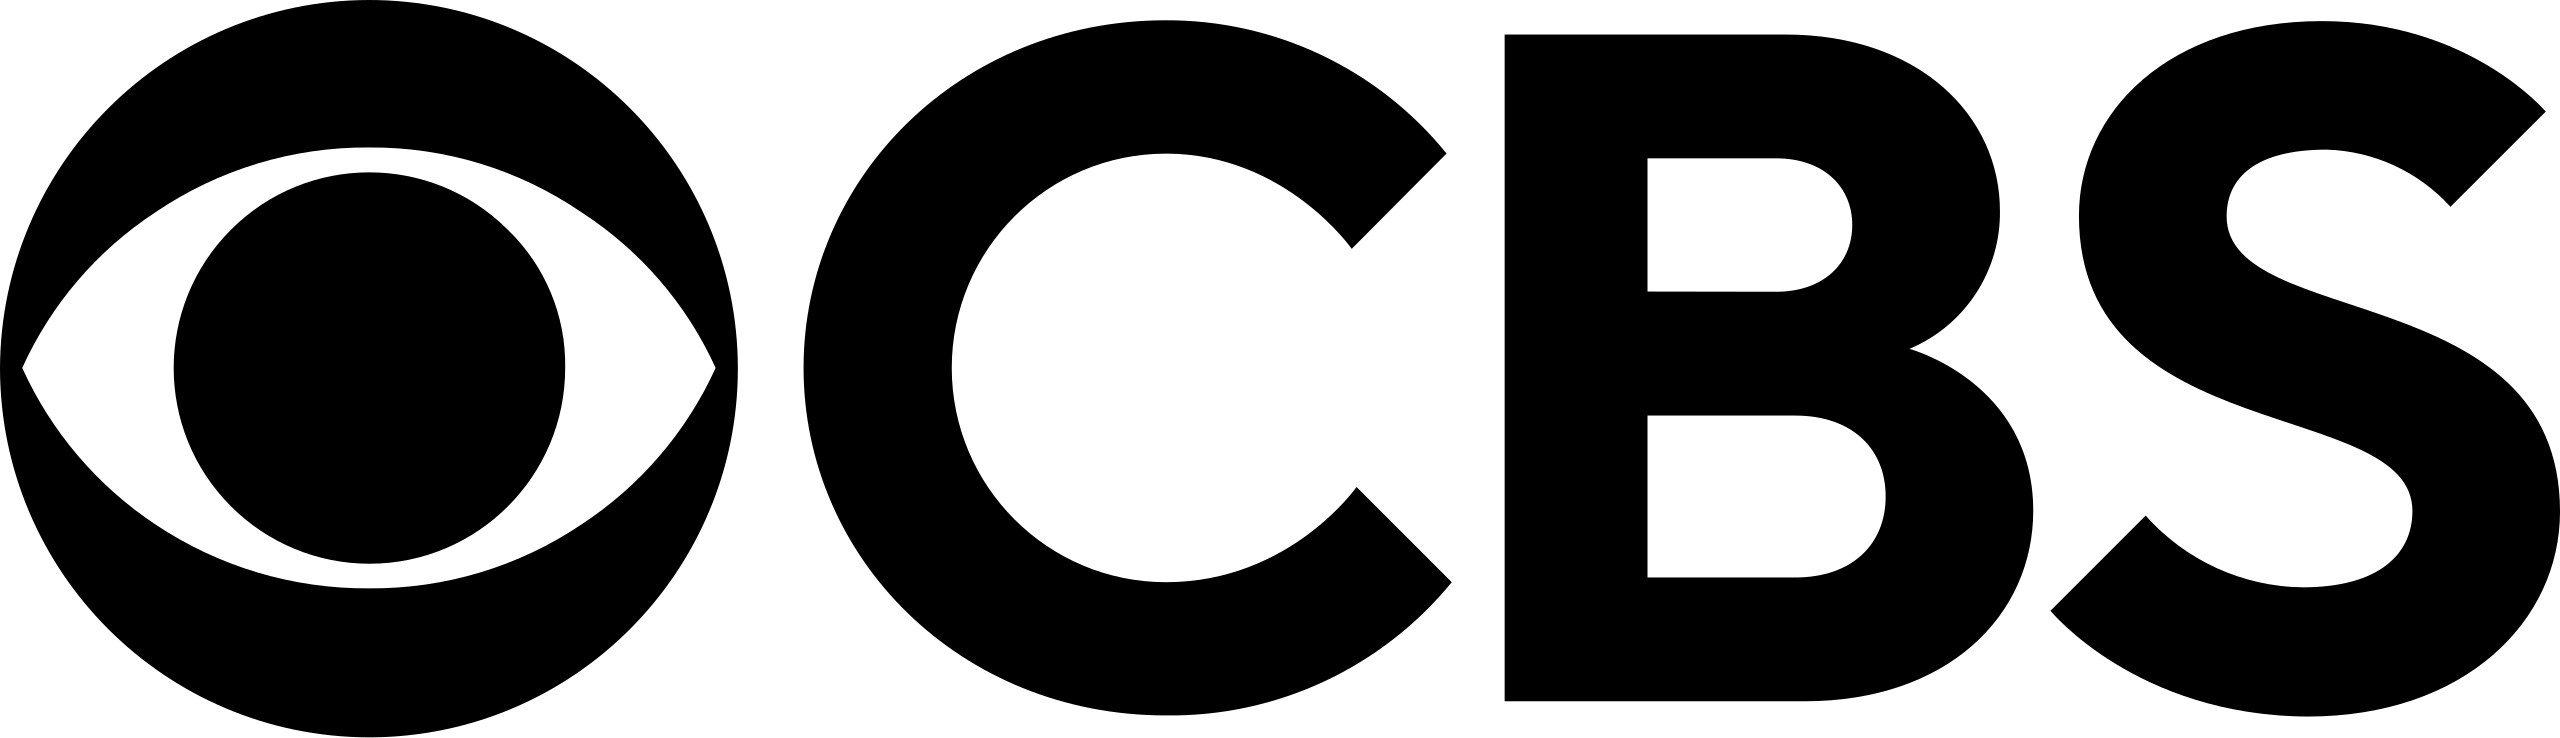 Archivo:CBS logo (2020).svg - Wikipedia, la enciclopedia libre